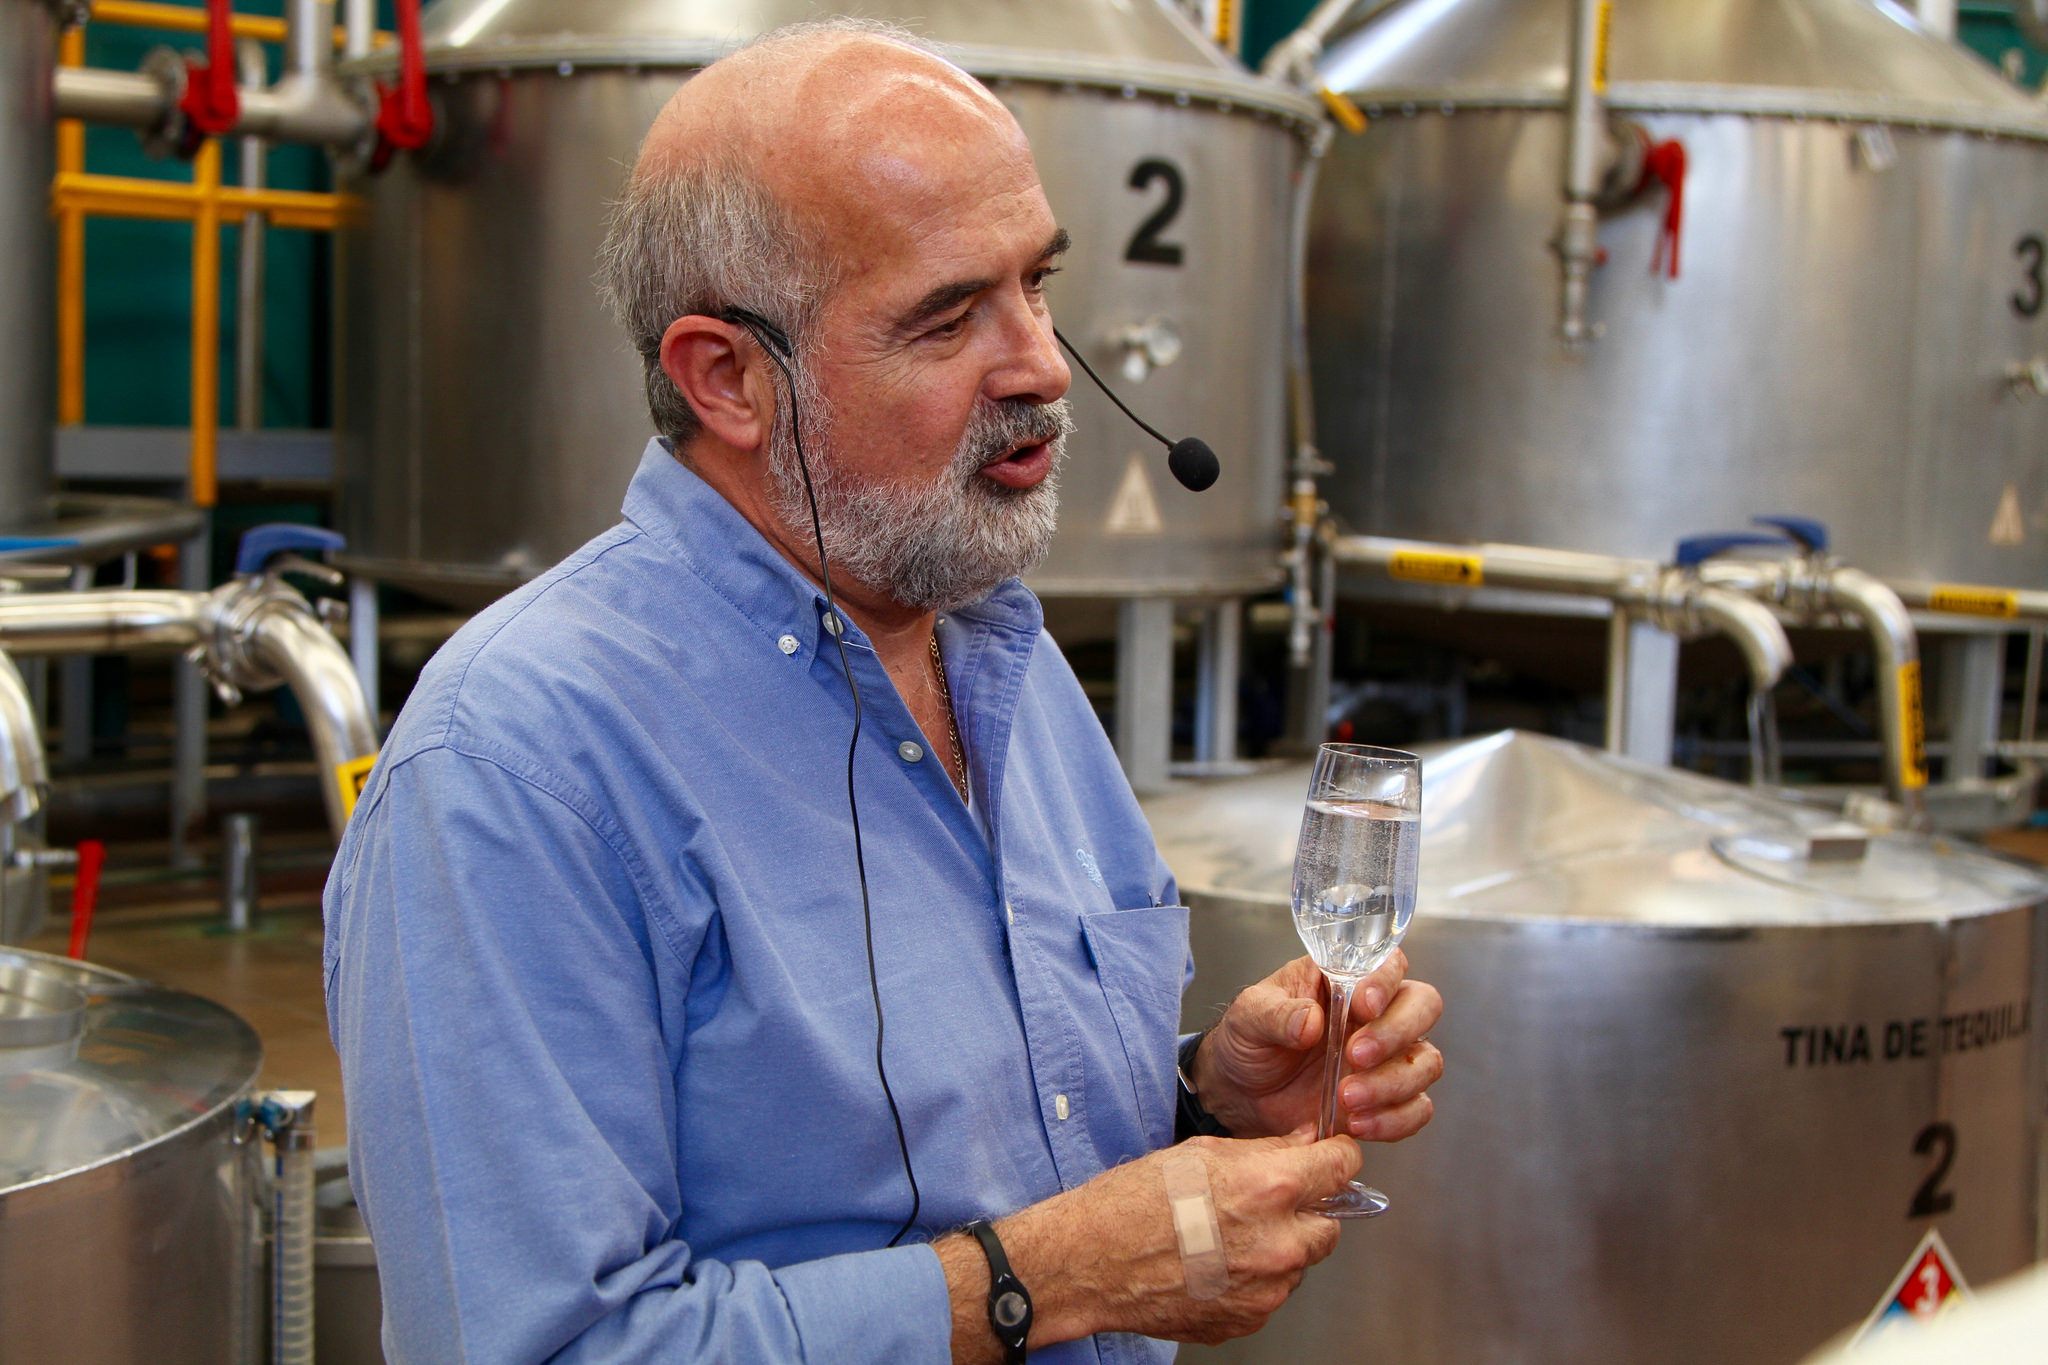 Don Julio Master Distiller Enrique de Colsa